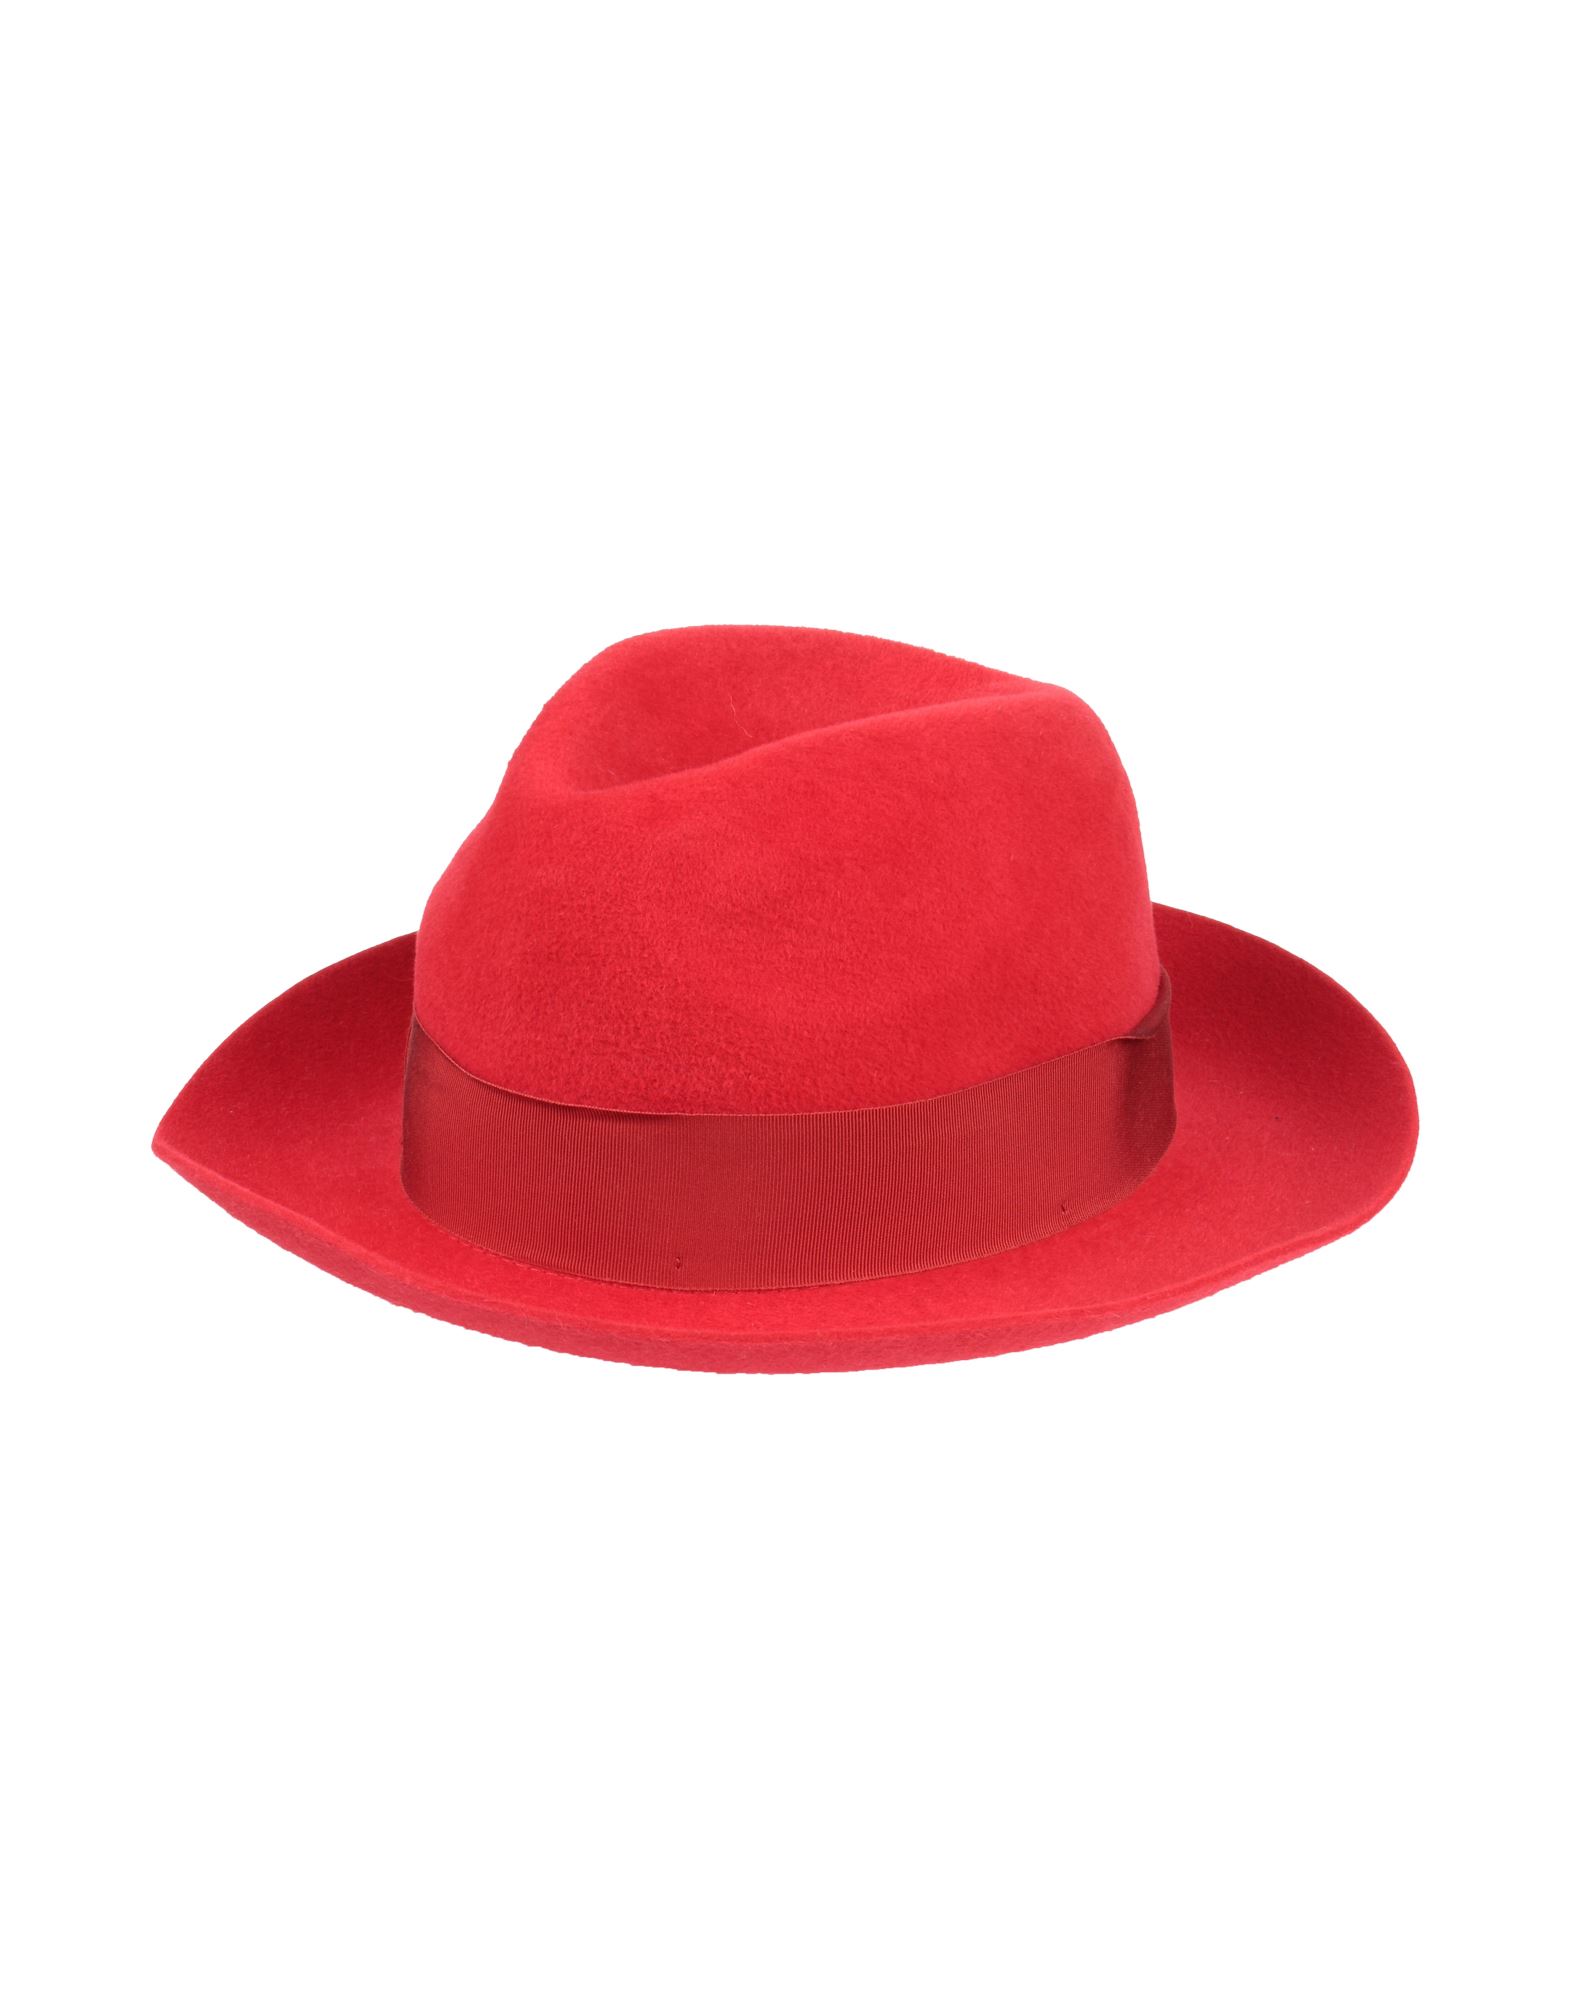 BORSALINO Mützen & Hüte Damen Rot von BORSALINO